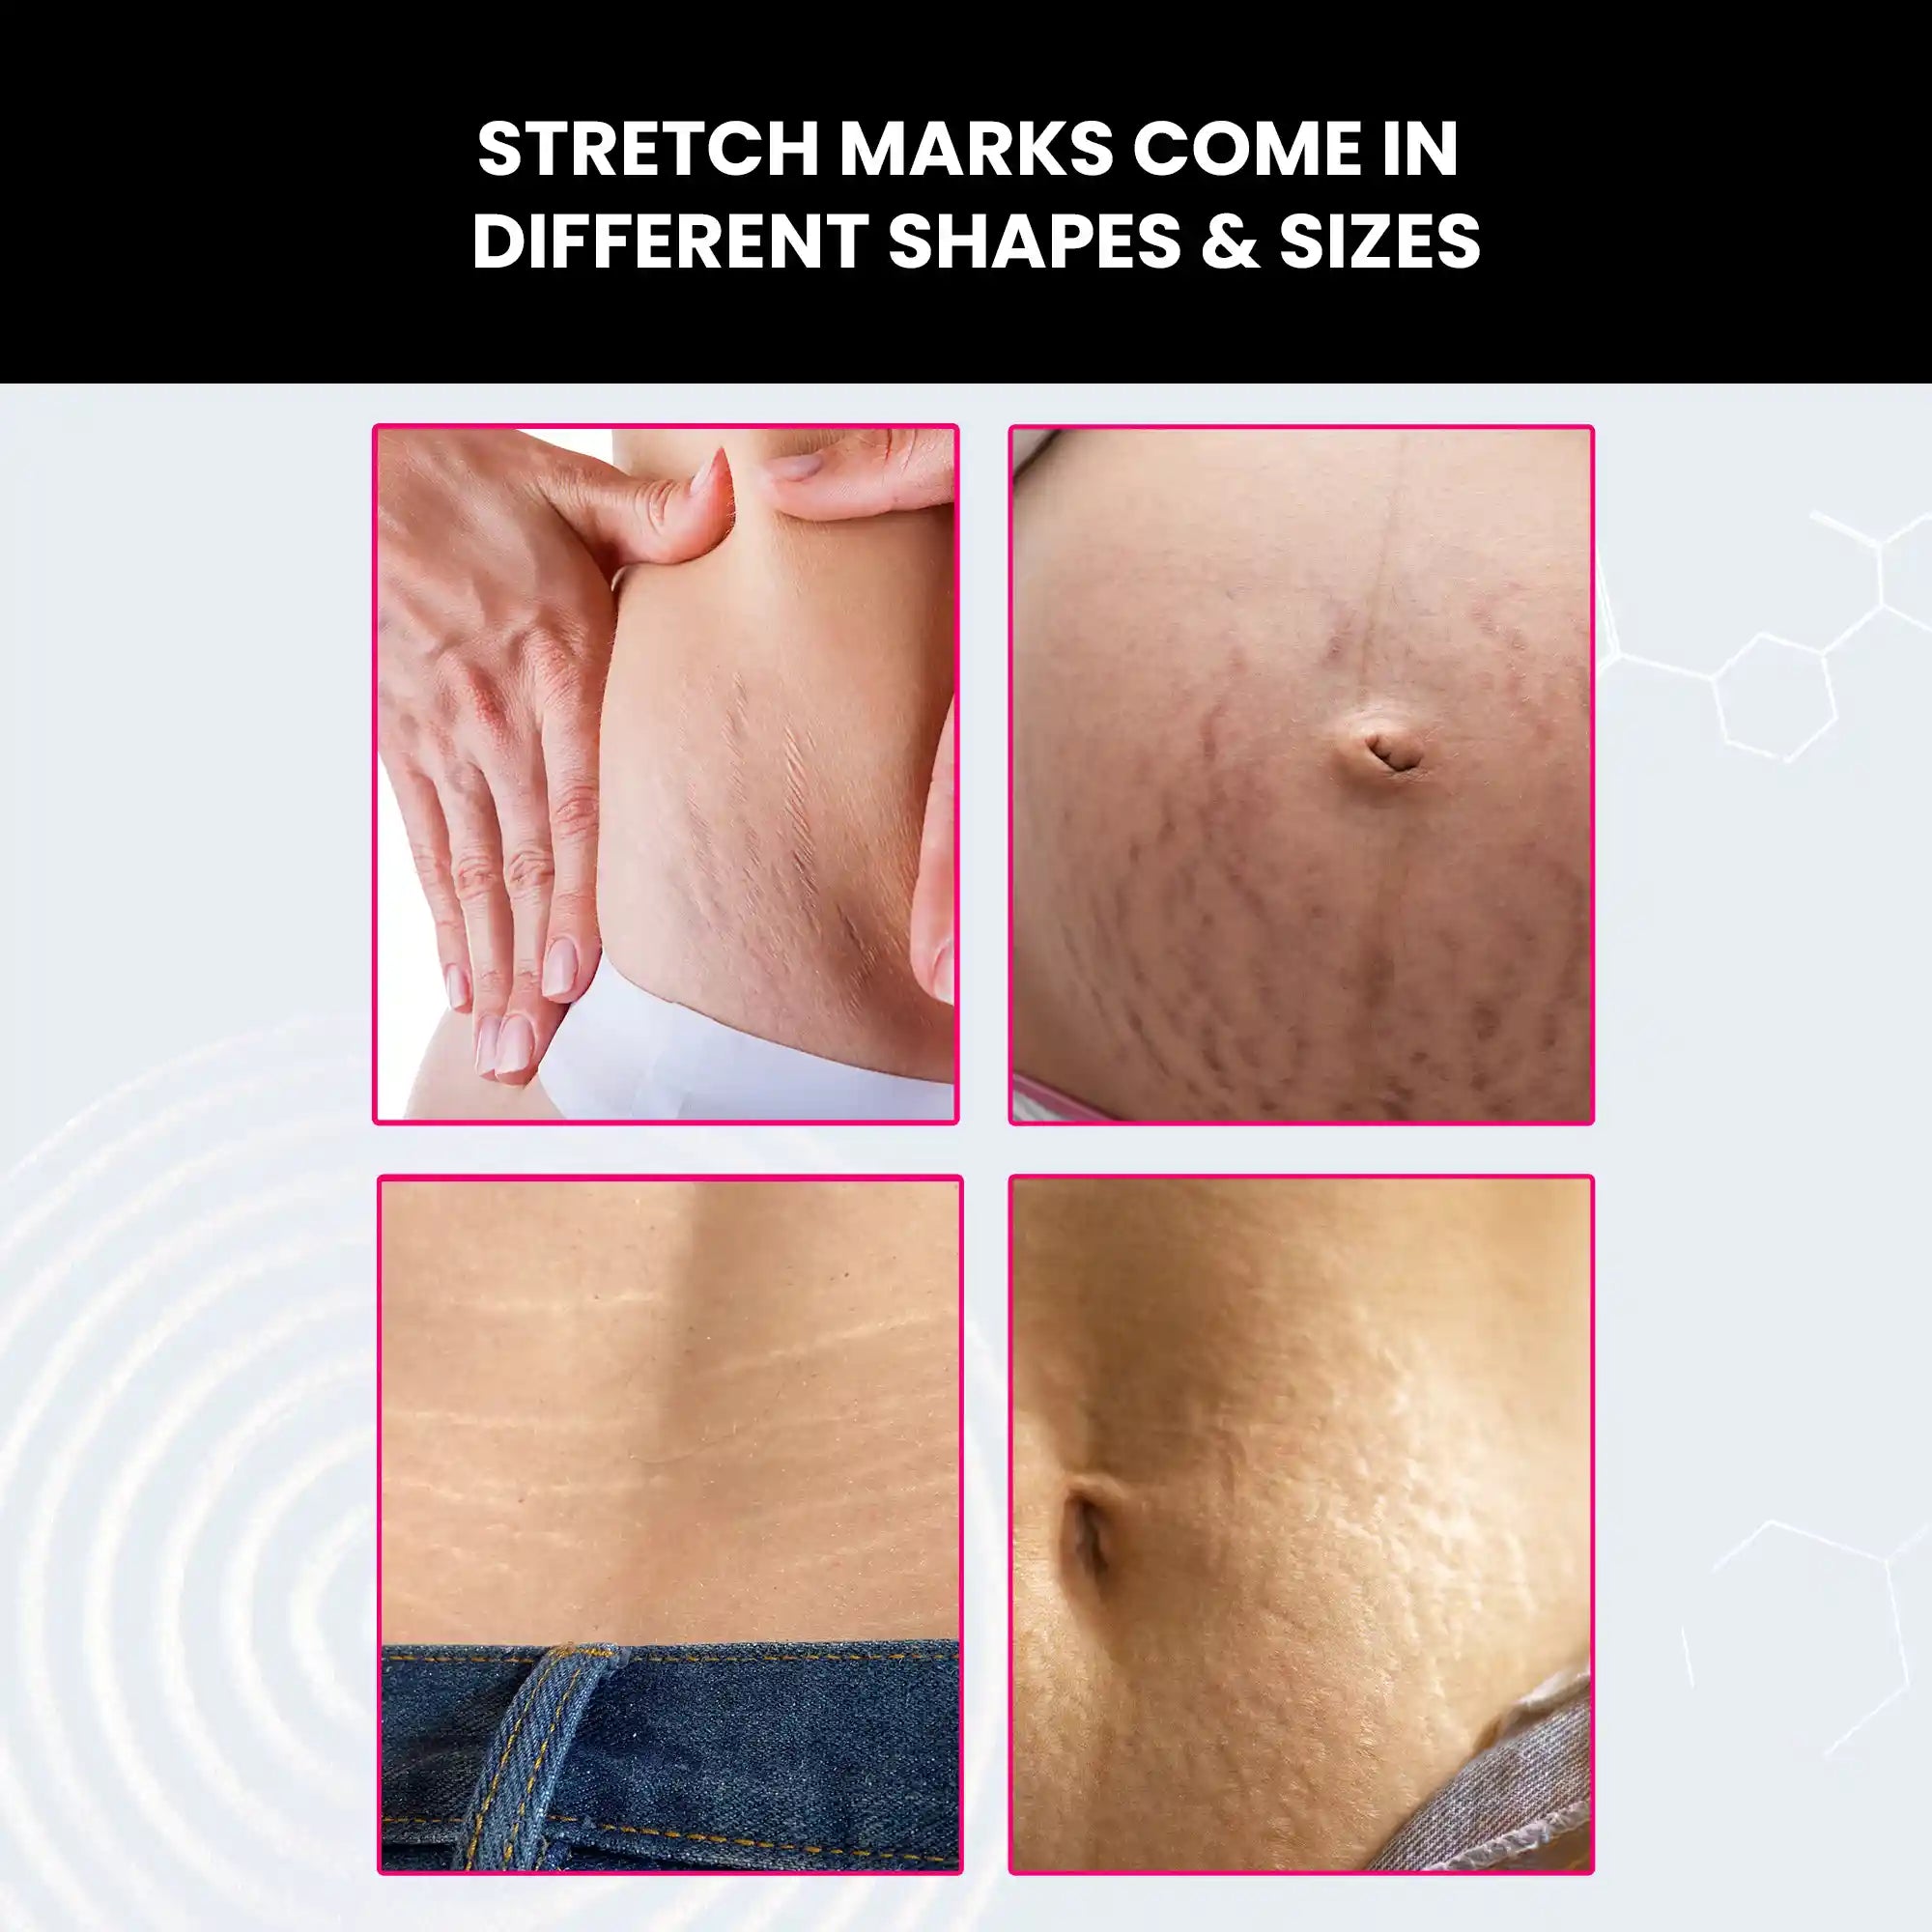 ThriveCo Stretch Marks Expert, Serum Cream for Women, 30ml